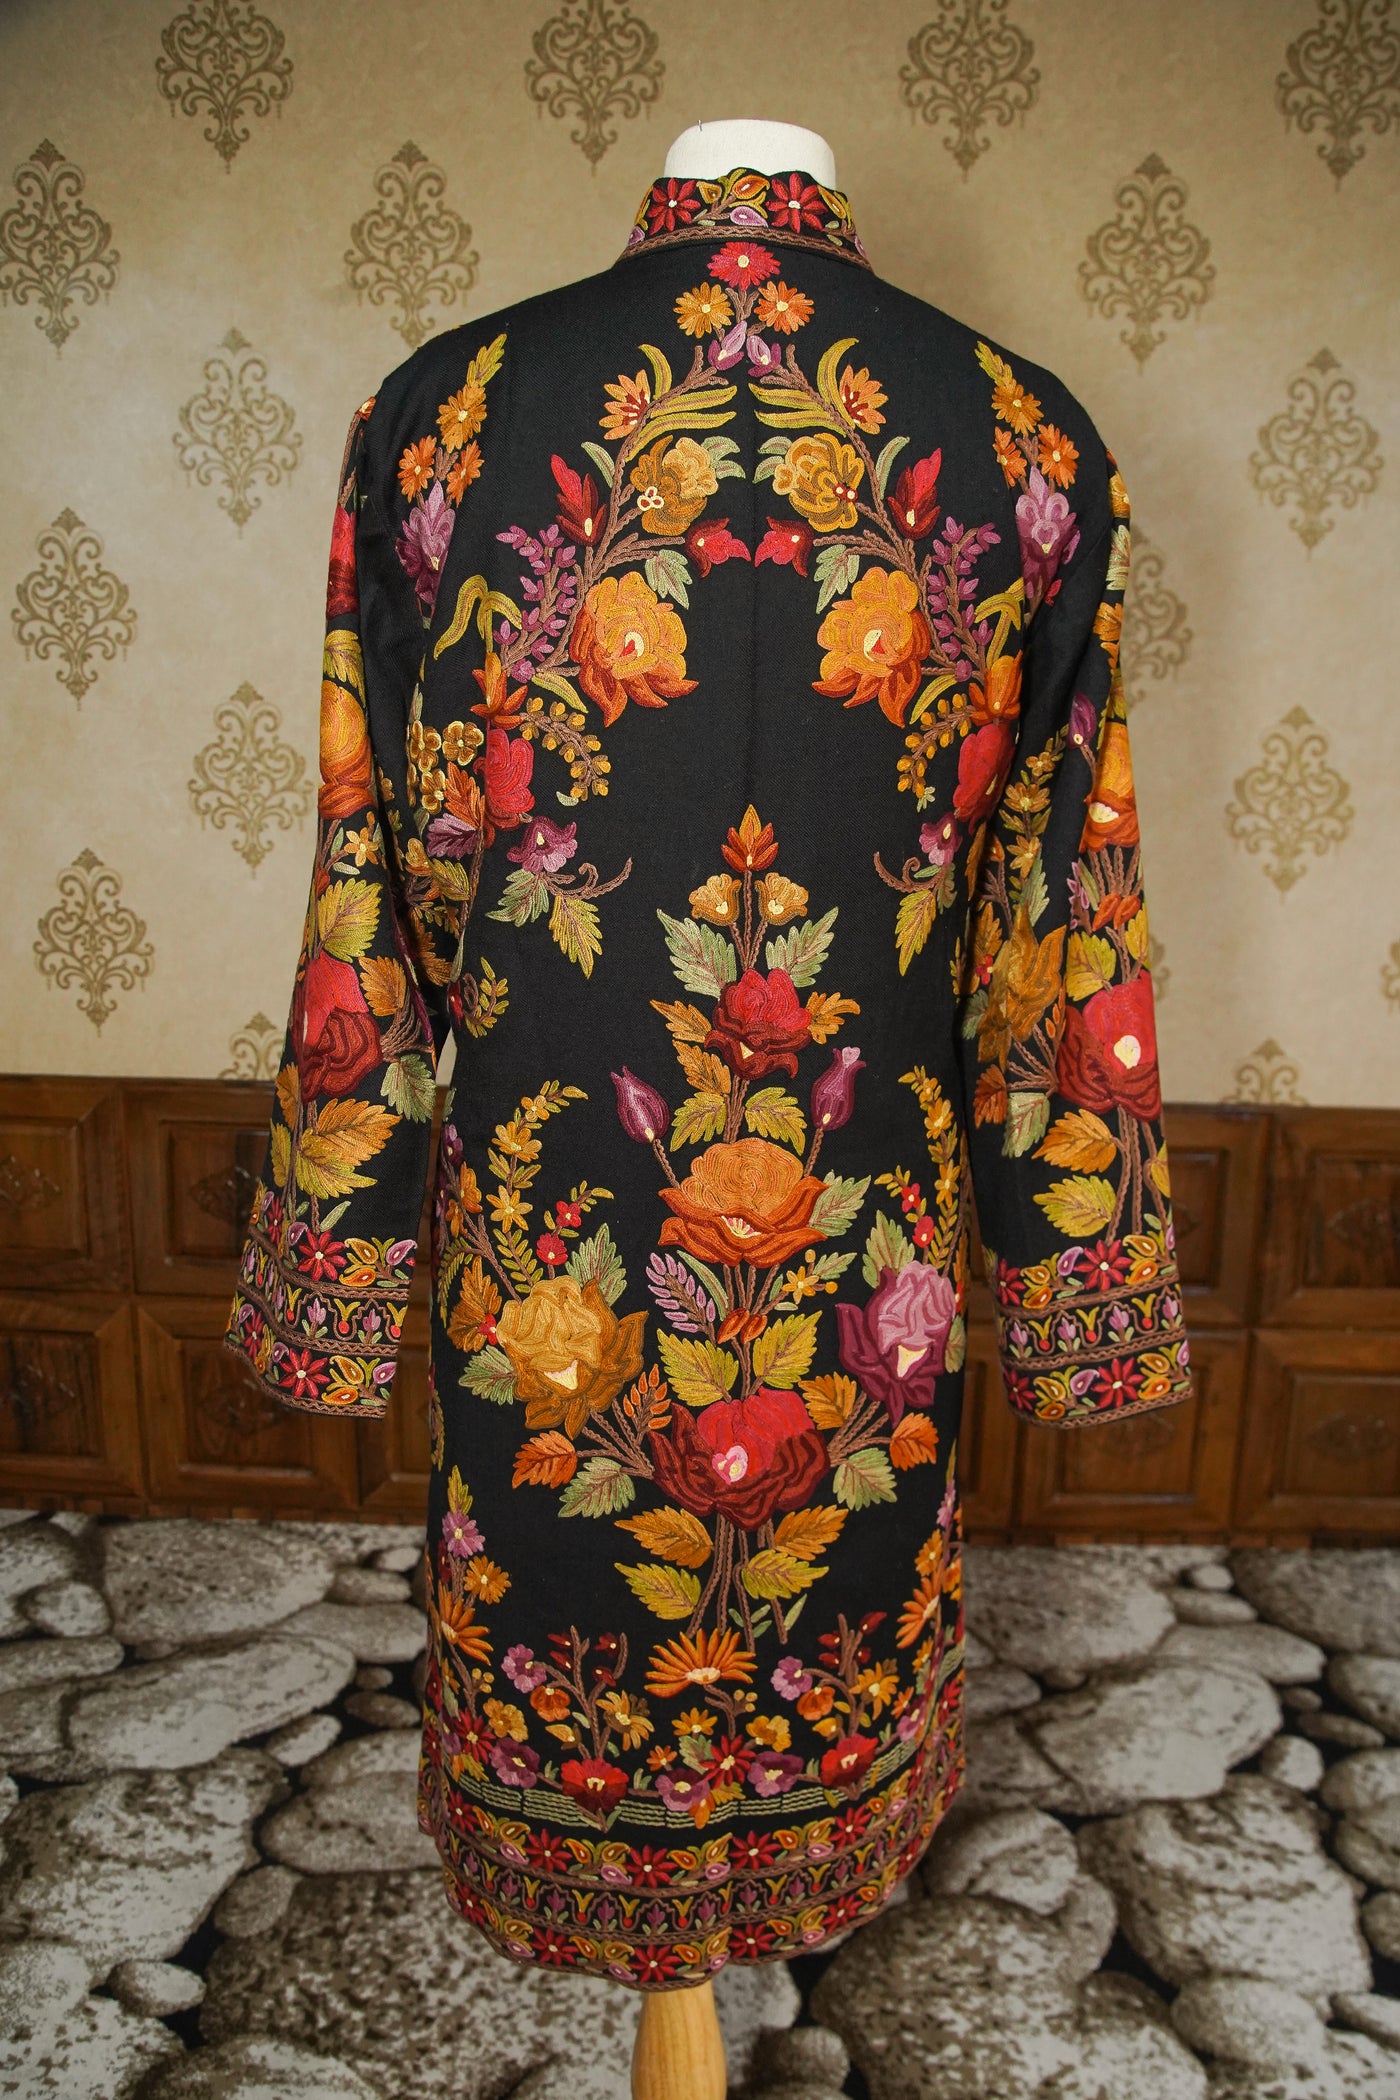 Shalimar Splendor: Floral Aari Masterpiece Jacket